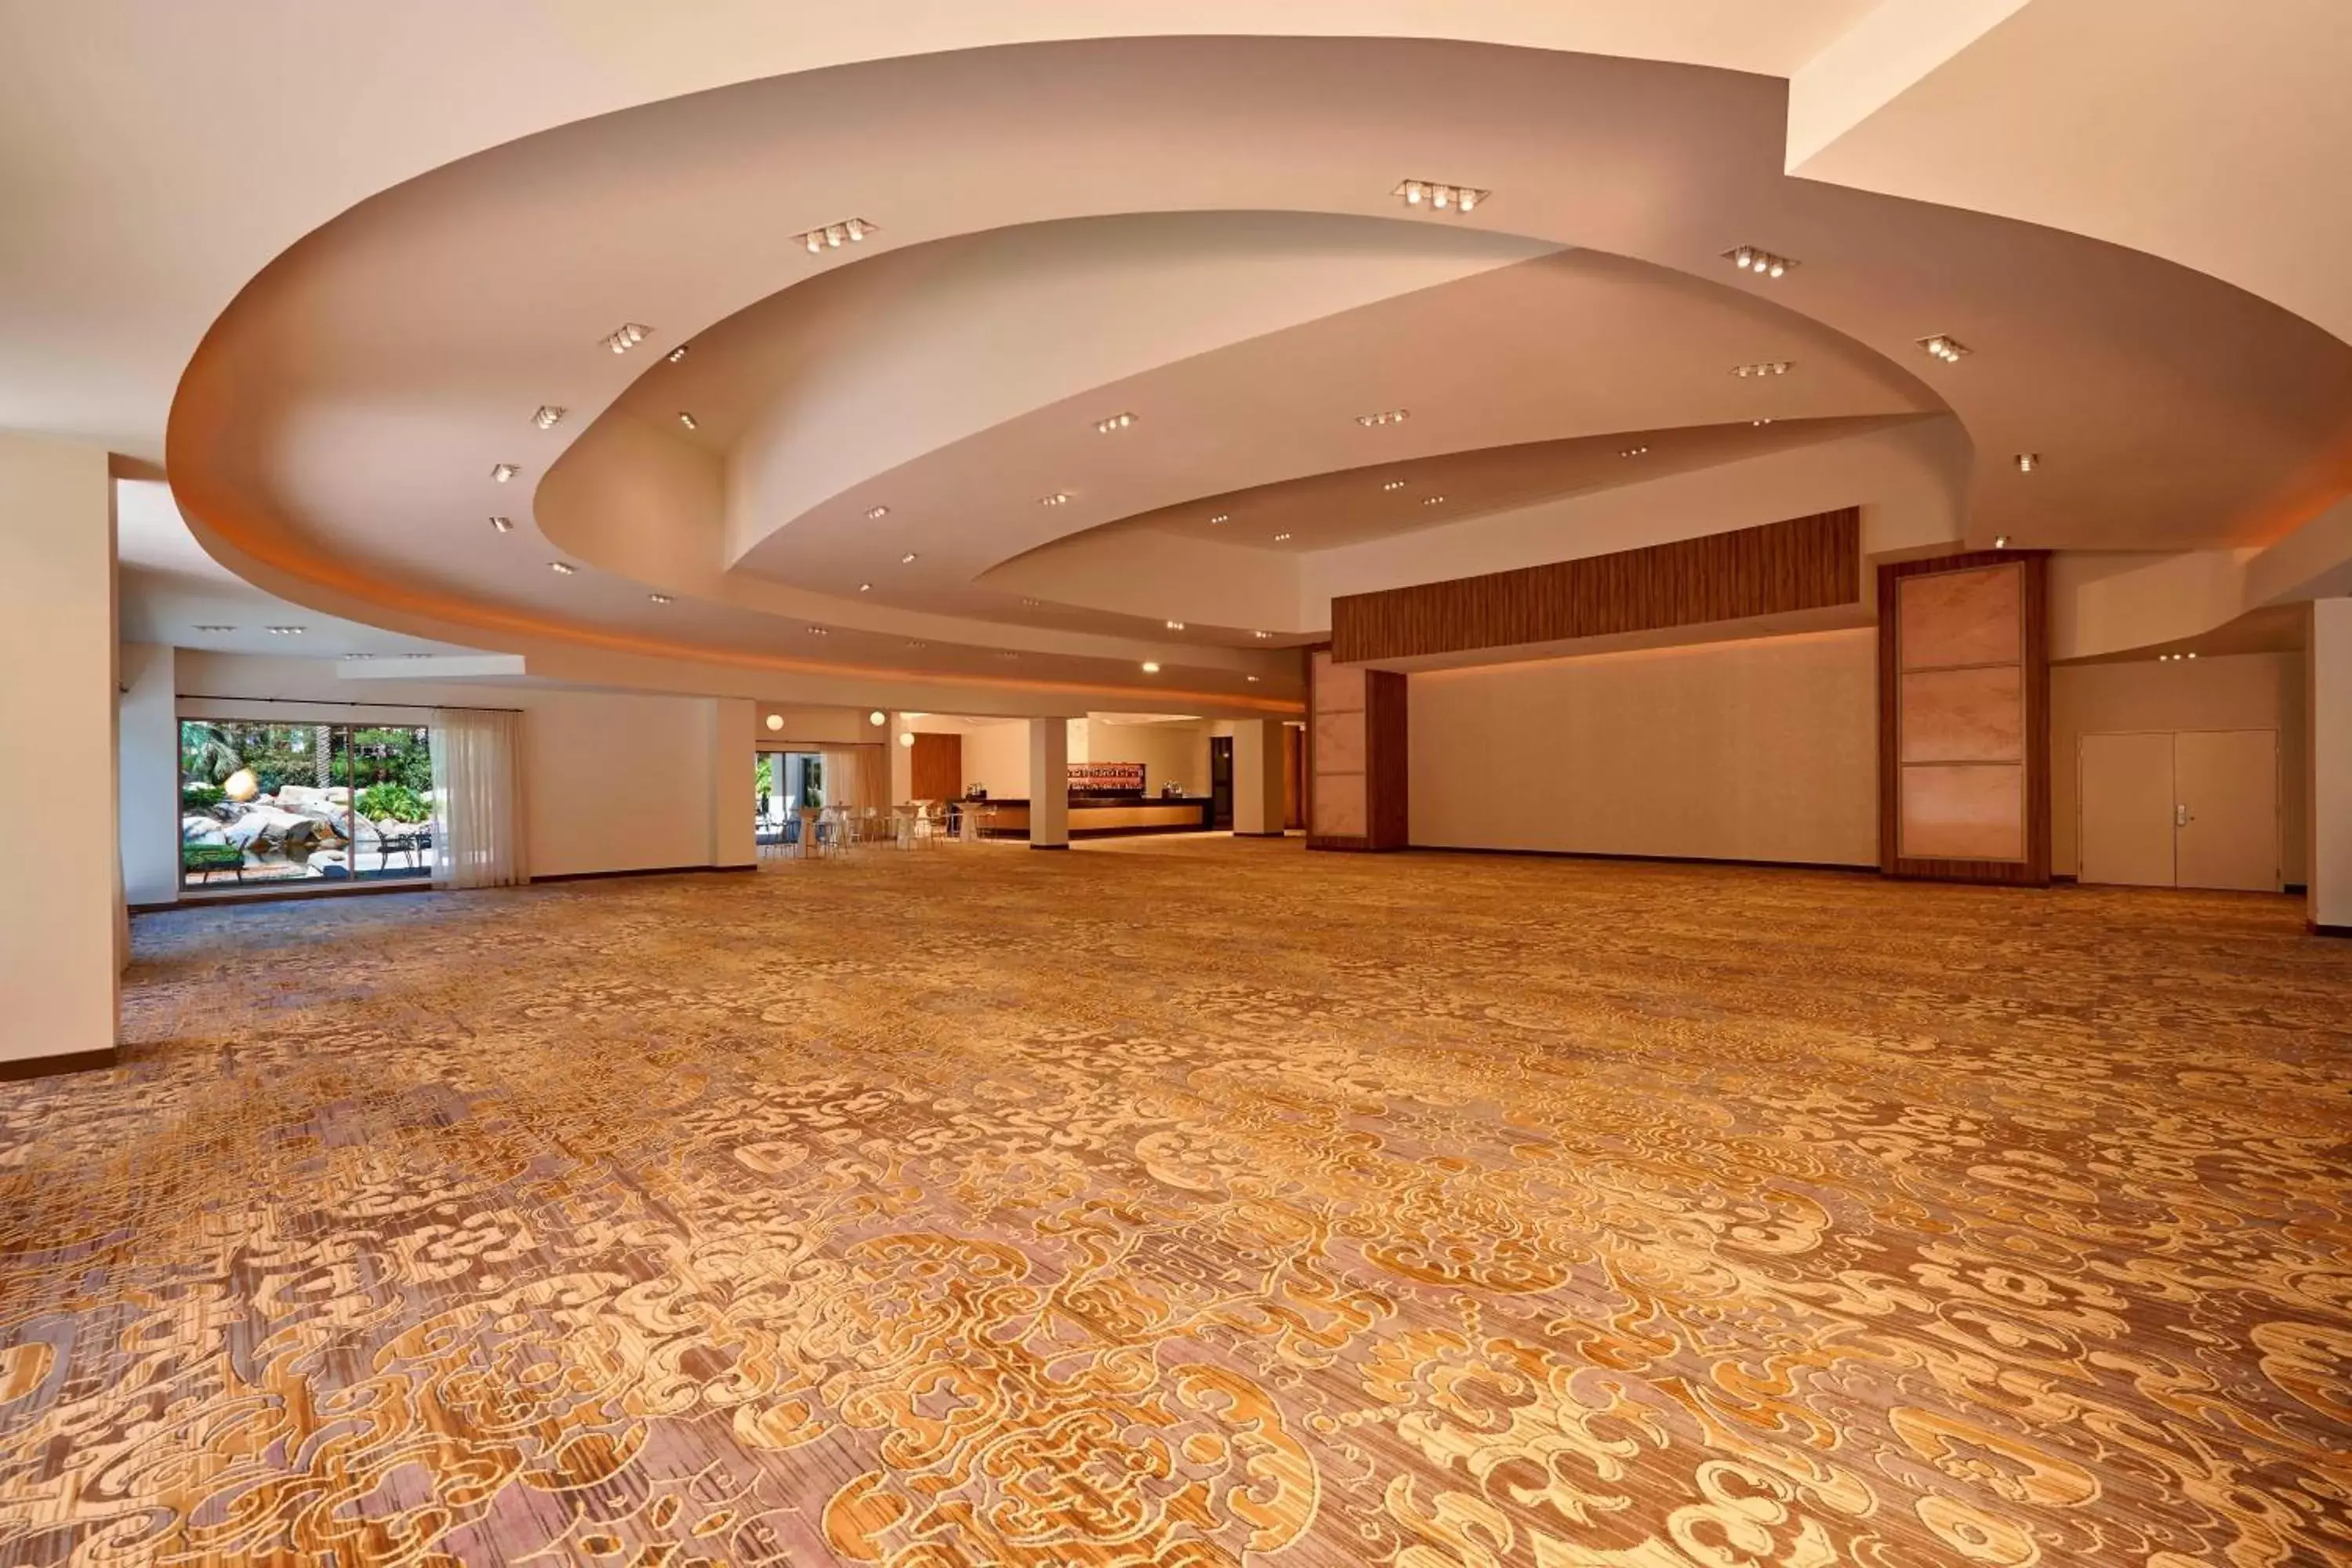 Meeting/conference room in JW Marriott Las Vegas Resort and Spa